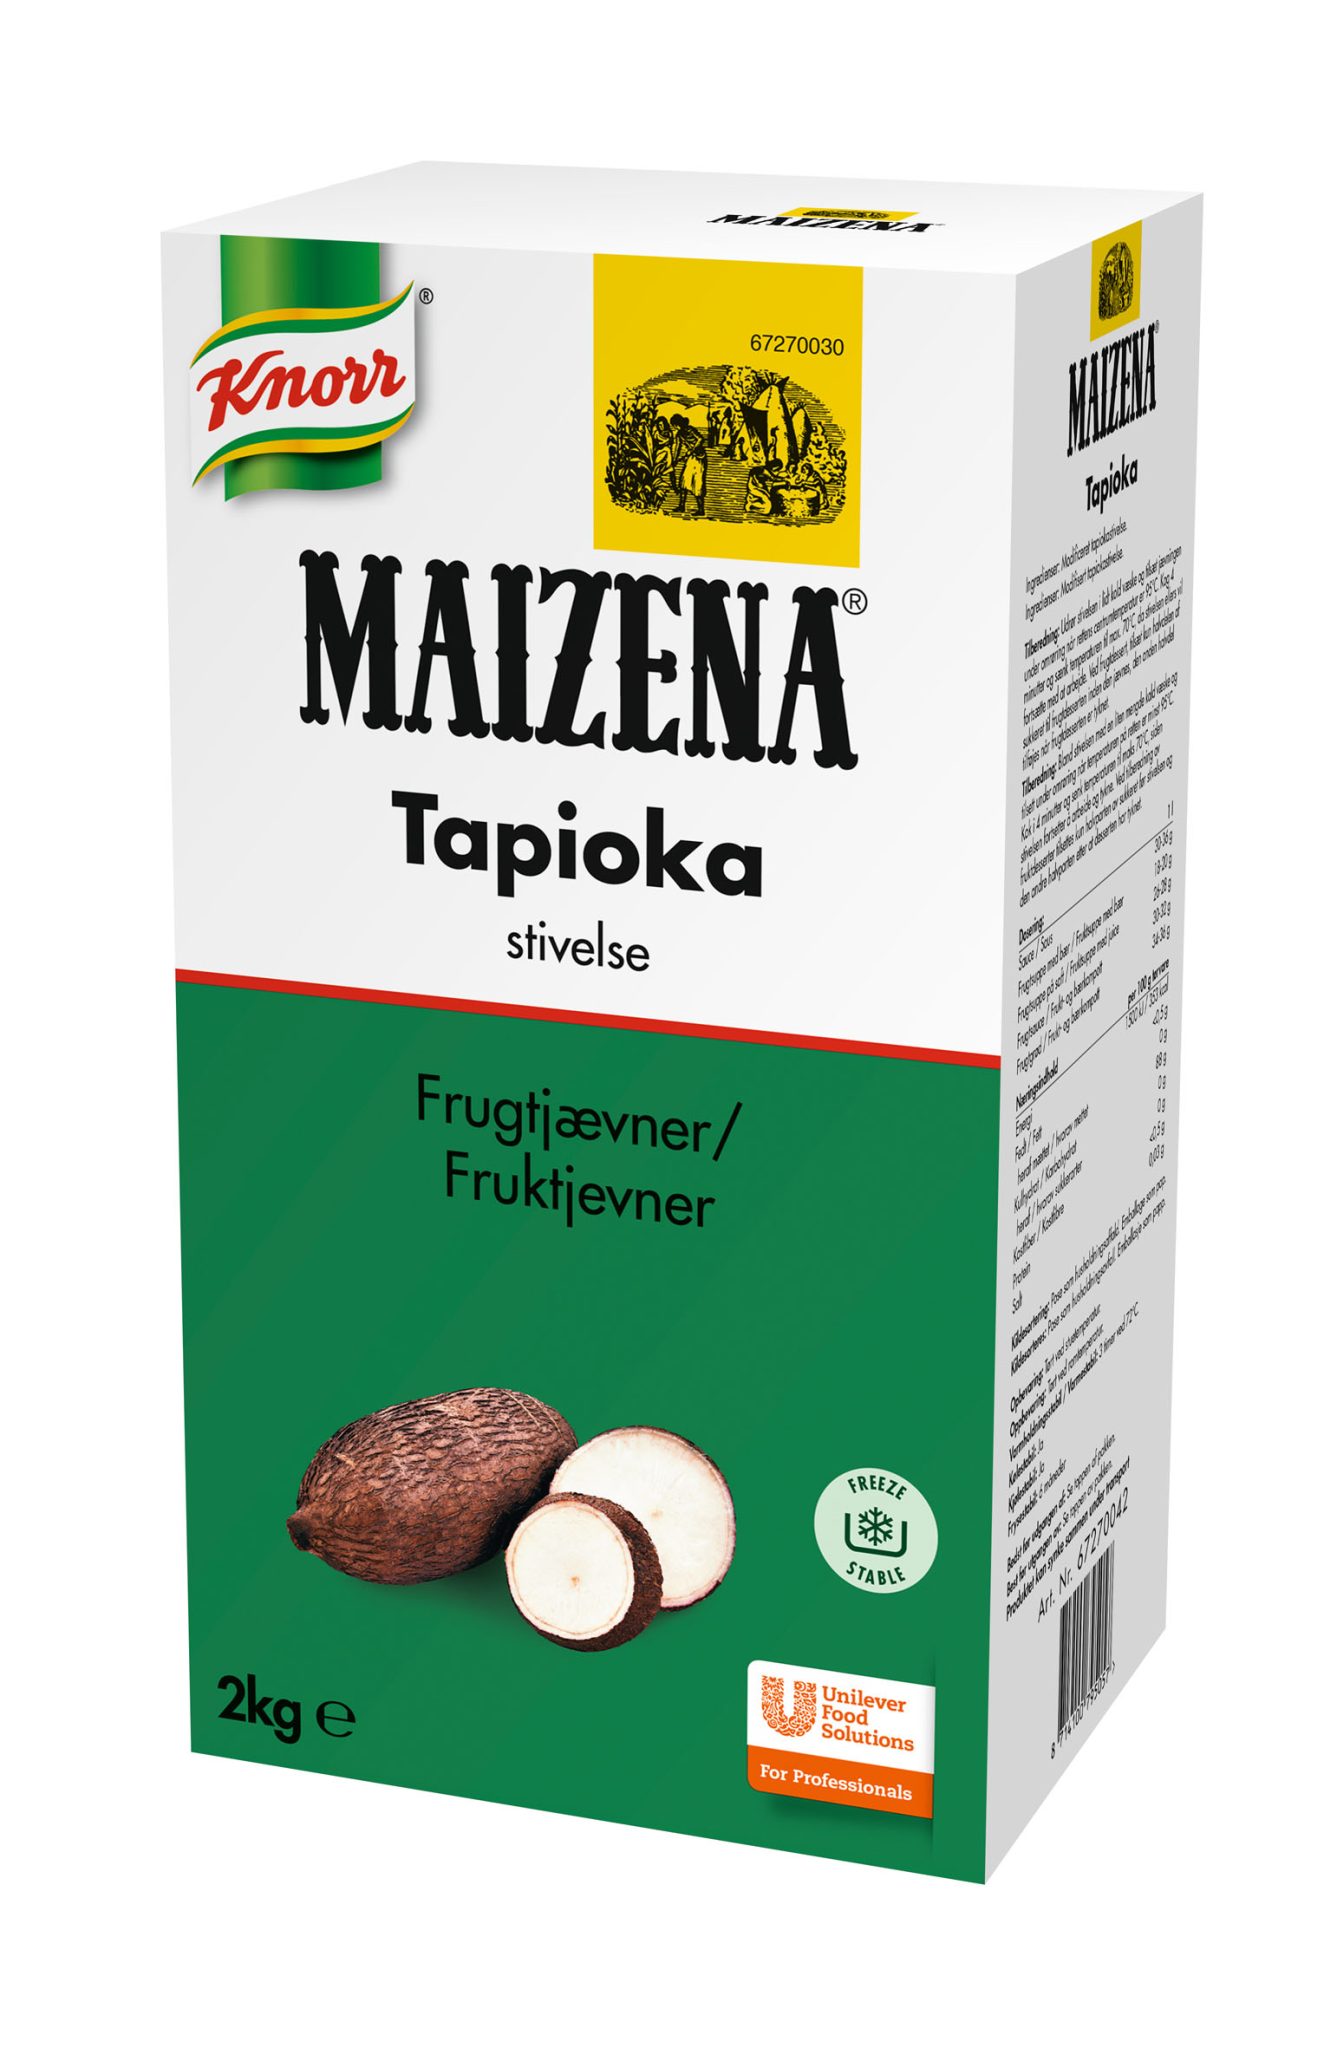 Maizena Tapioca Sósujafnari 2kg (4)